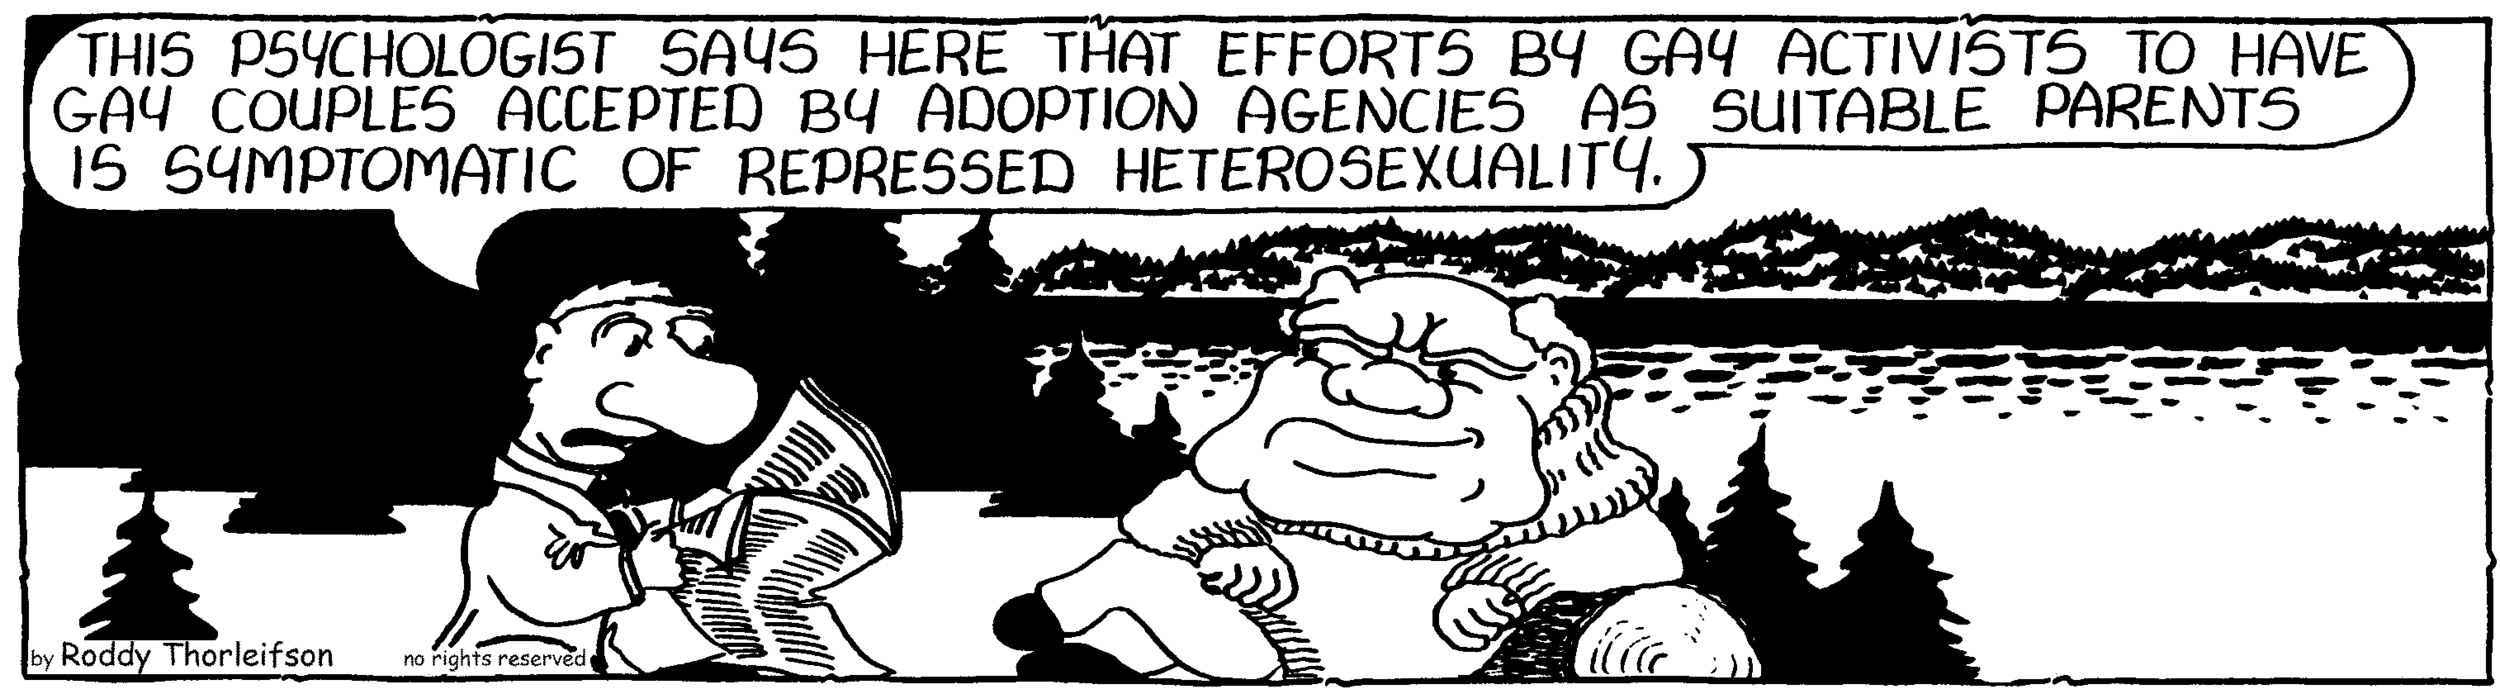 free cartoon psychology psychological gays and gay activists